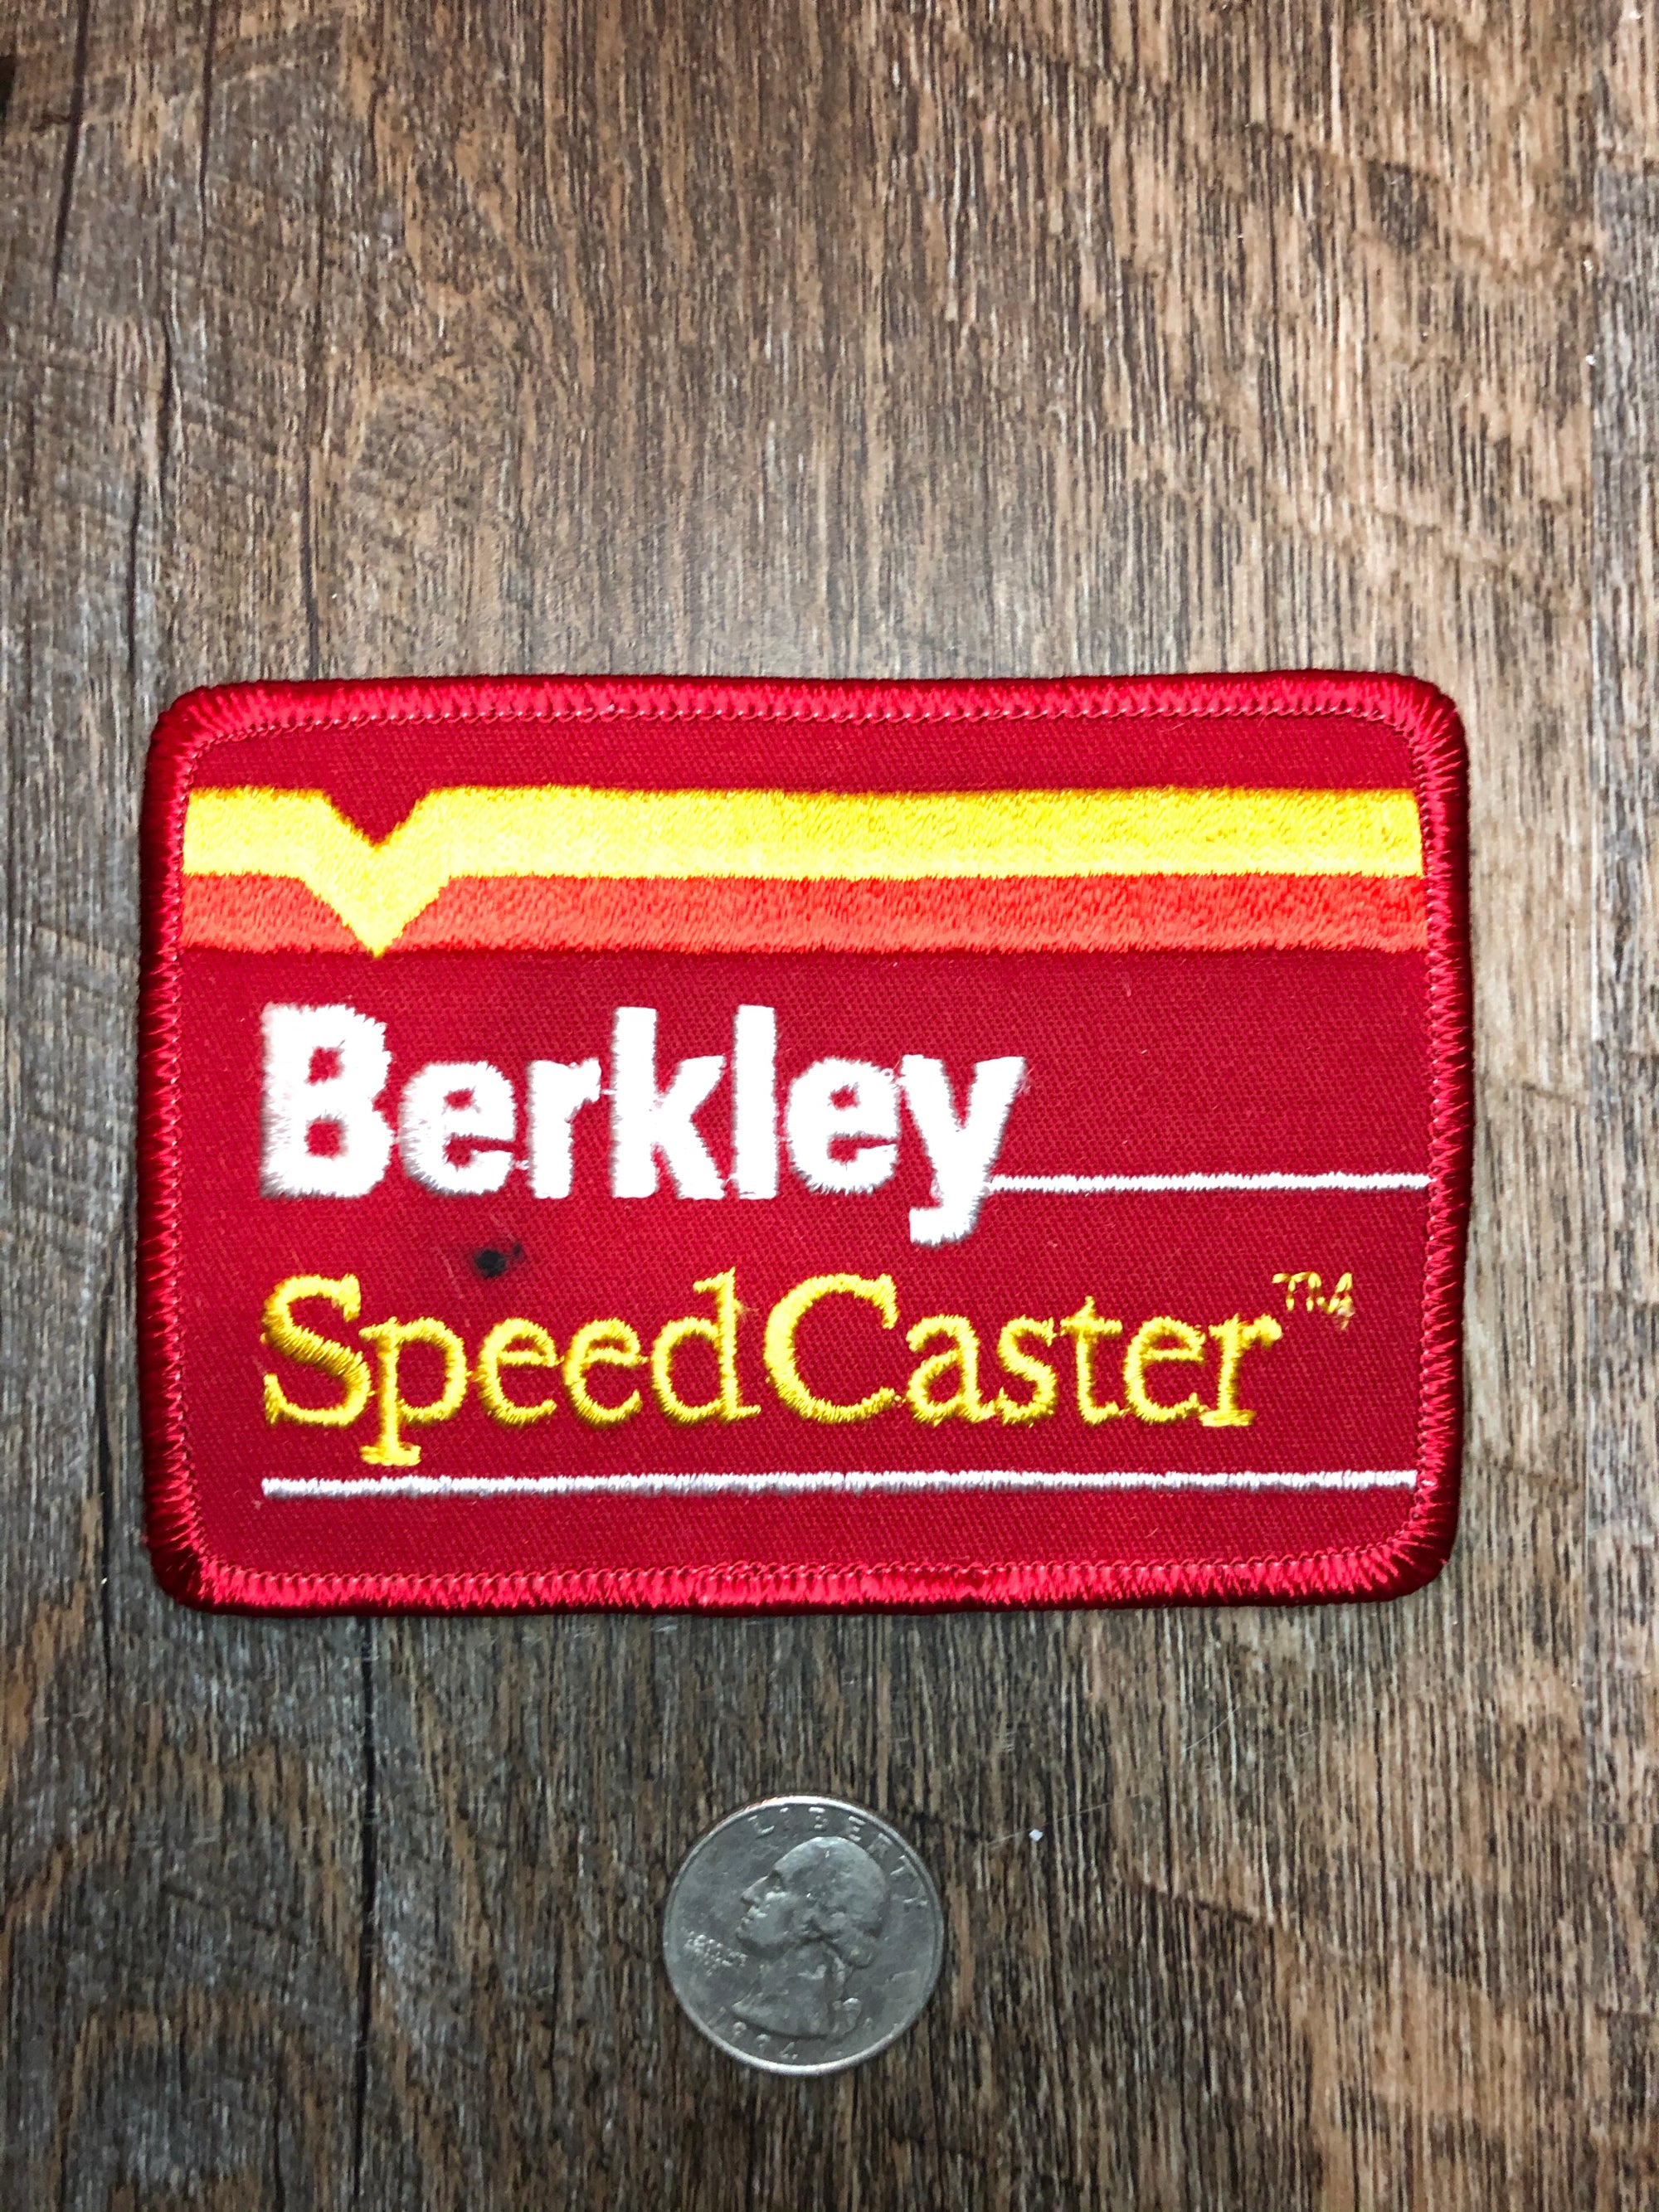 Berkley SpeedCaster, Fishing Gear, Fish, Water, Lake, Rods